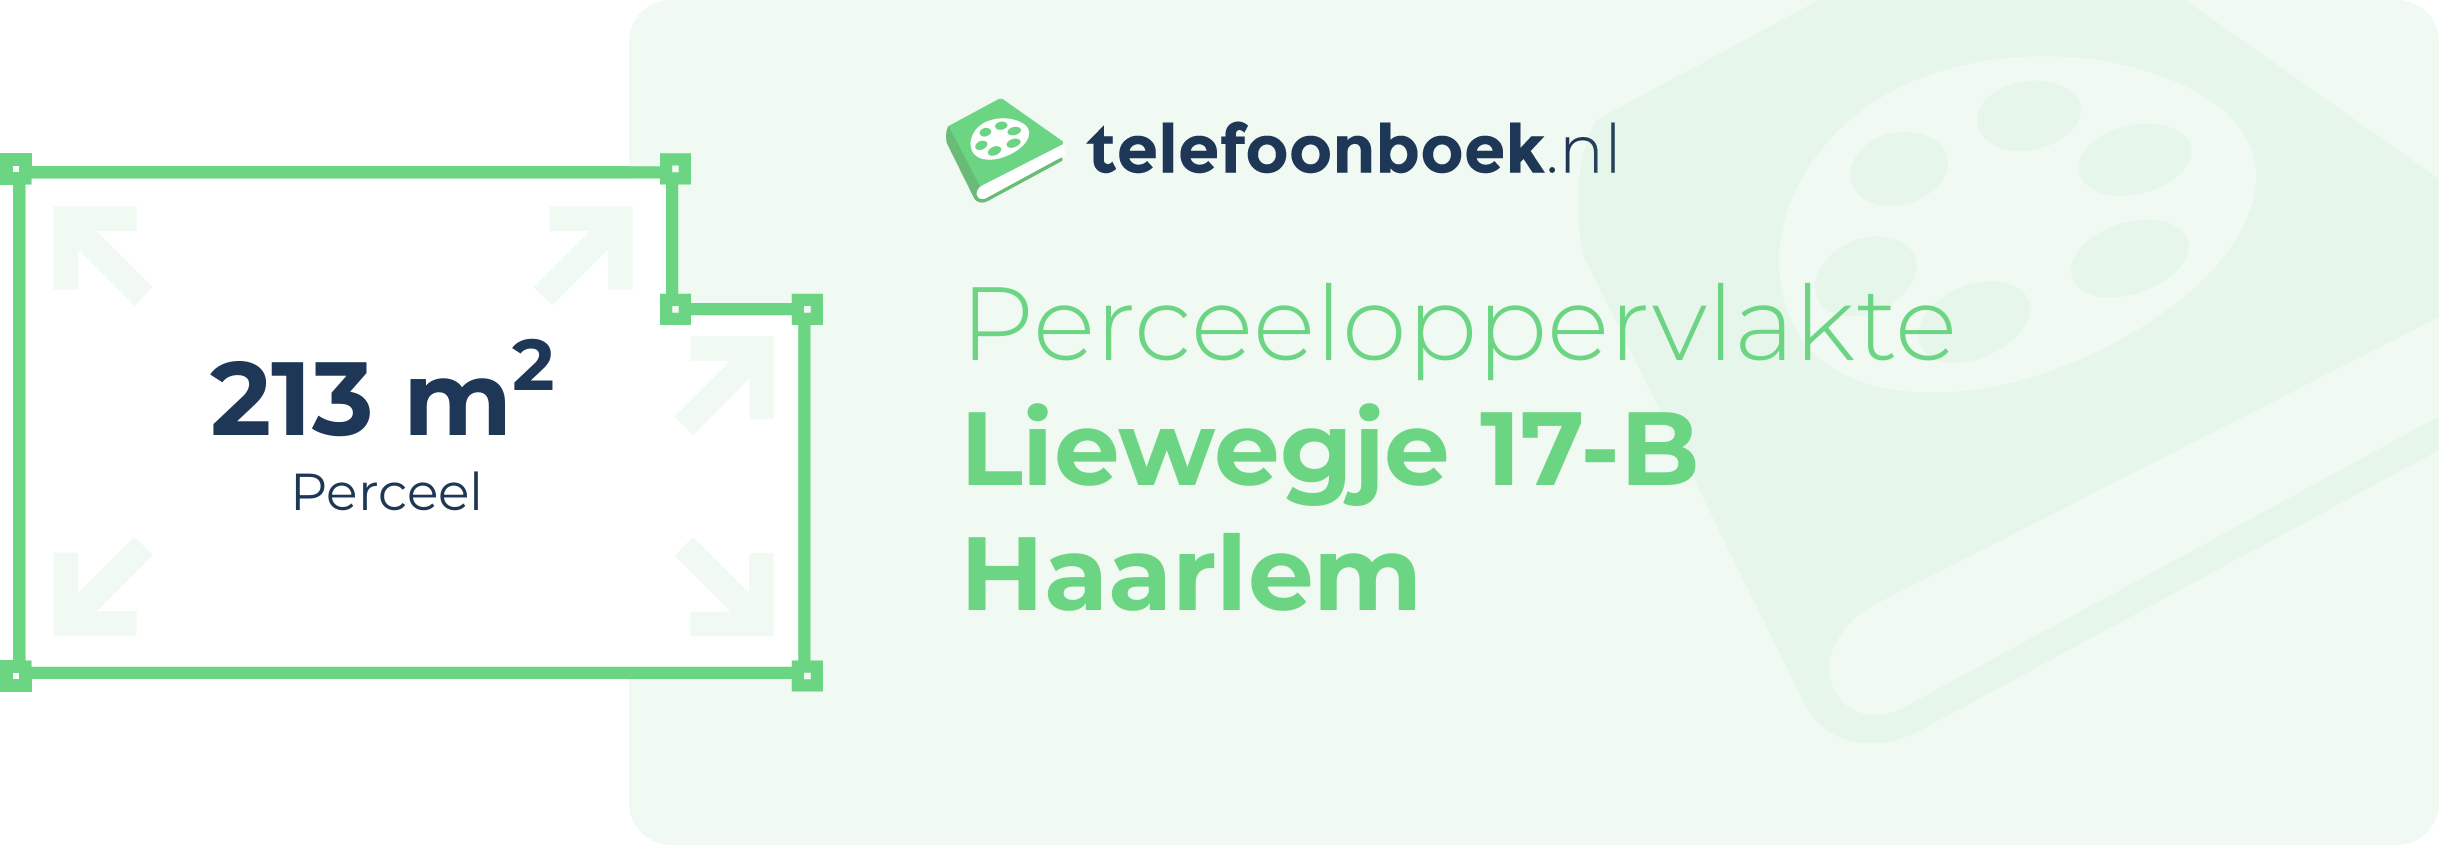 Perceeloppervlakte Liewegje 17-B Haarlem